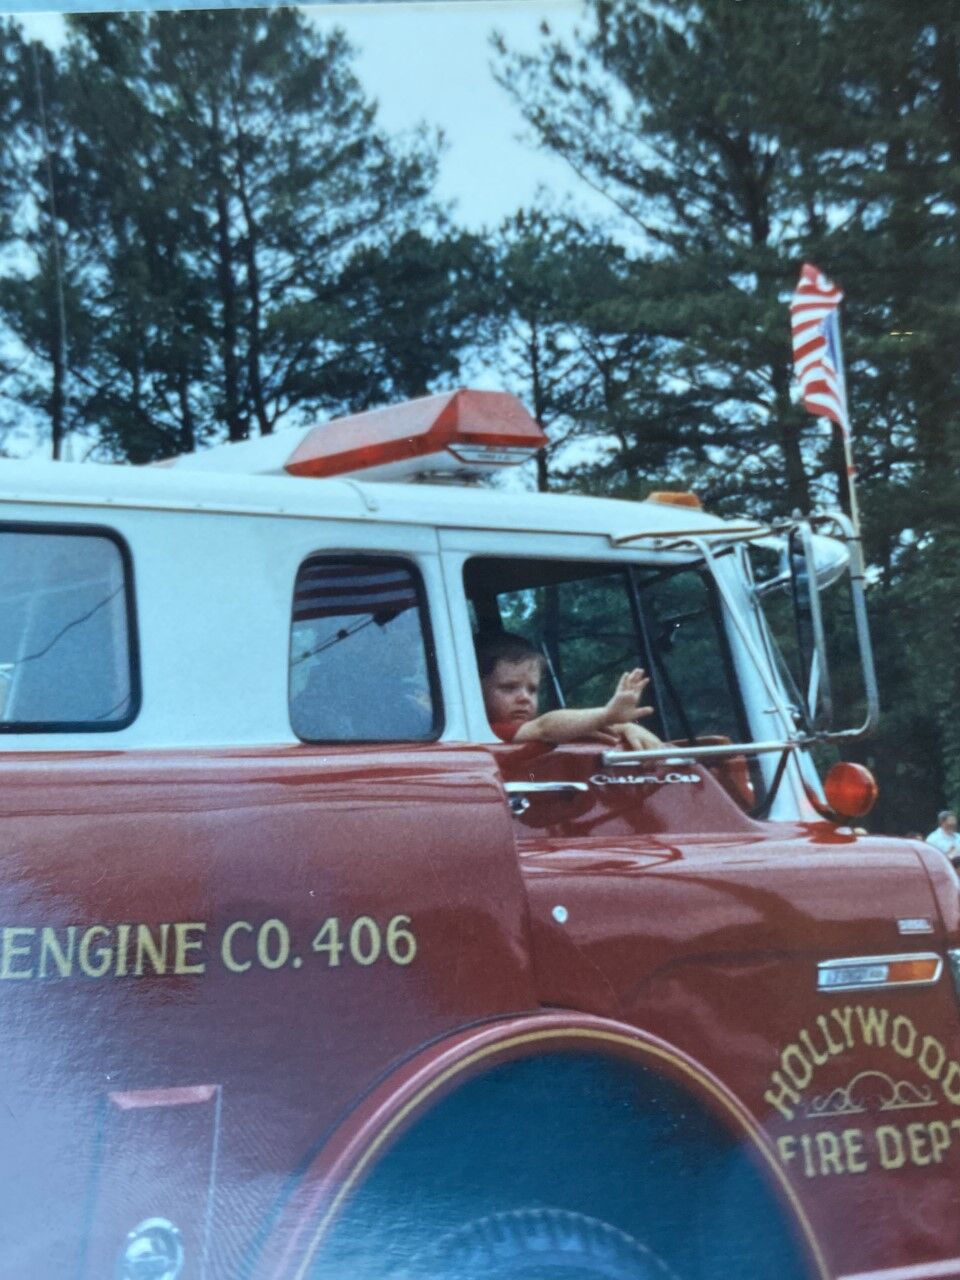 Alabama Original: Hollywood family, fire truck serves community as a team for decades